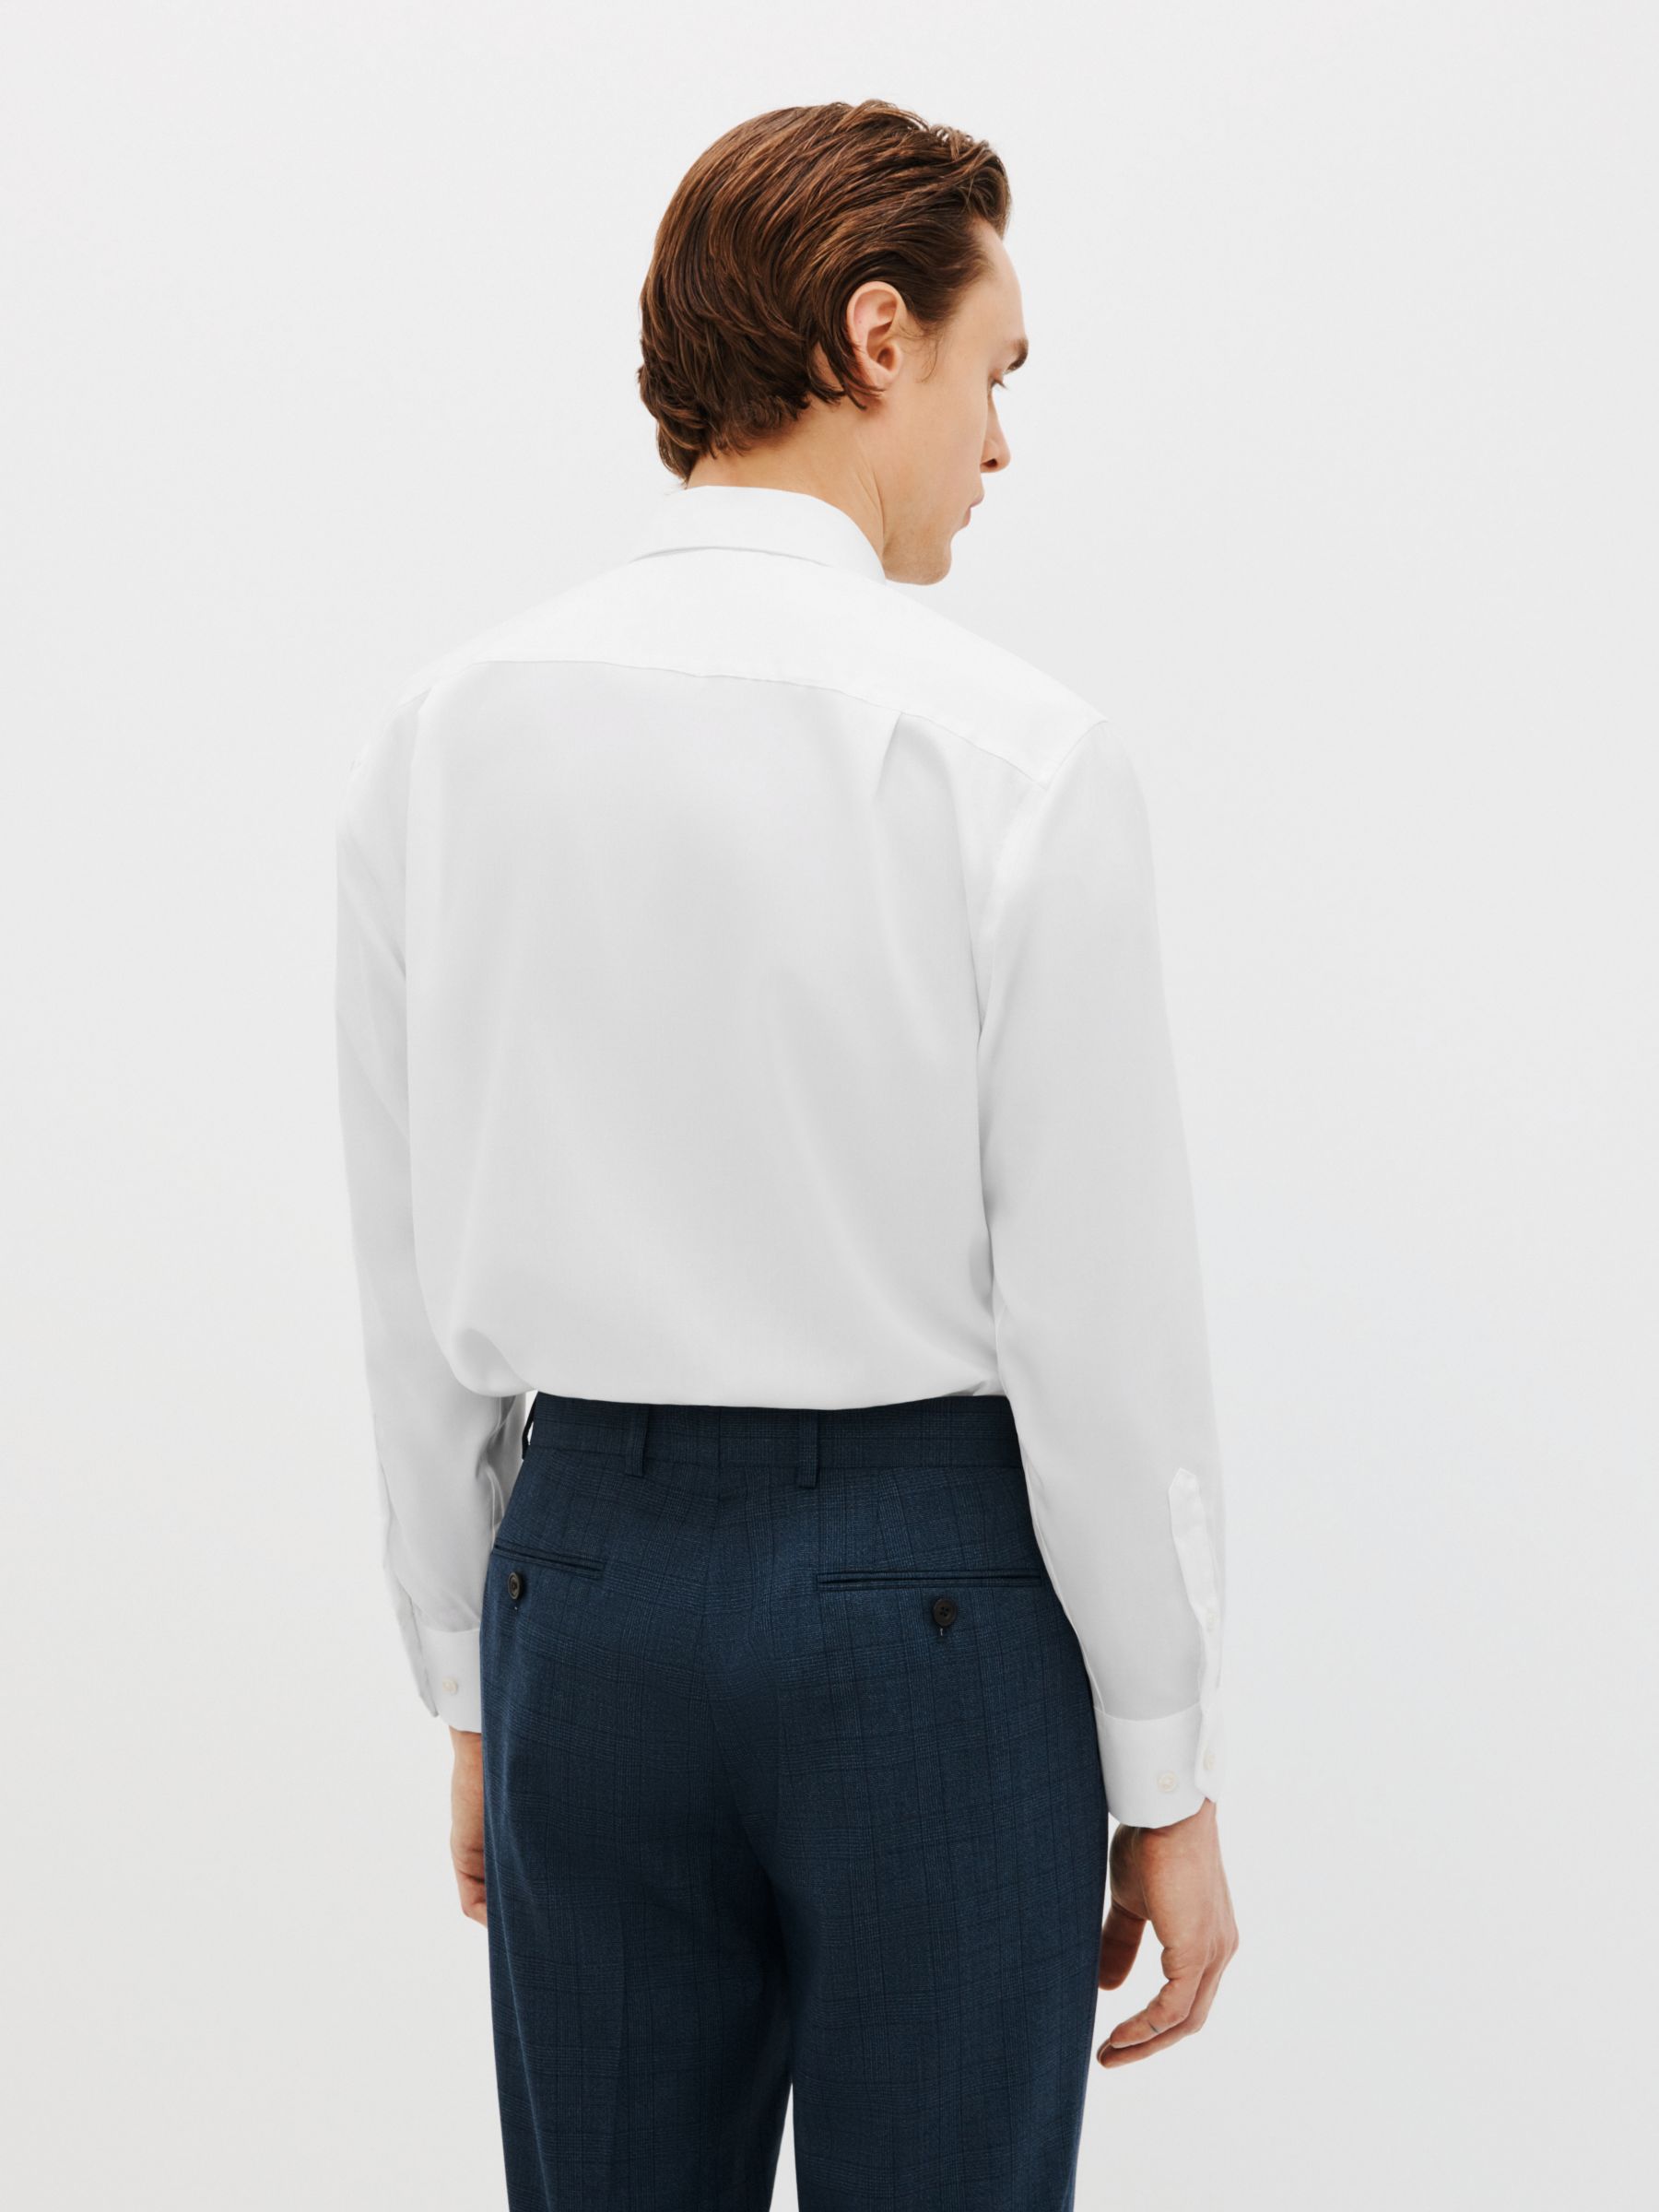 John Lewis Non Iron Twill Regular Fit Single Cuff Shirt, White, 16.5L